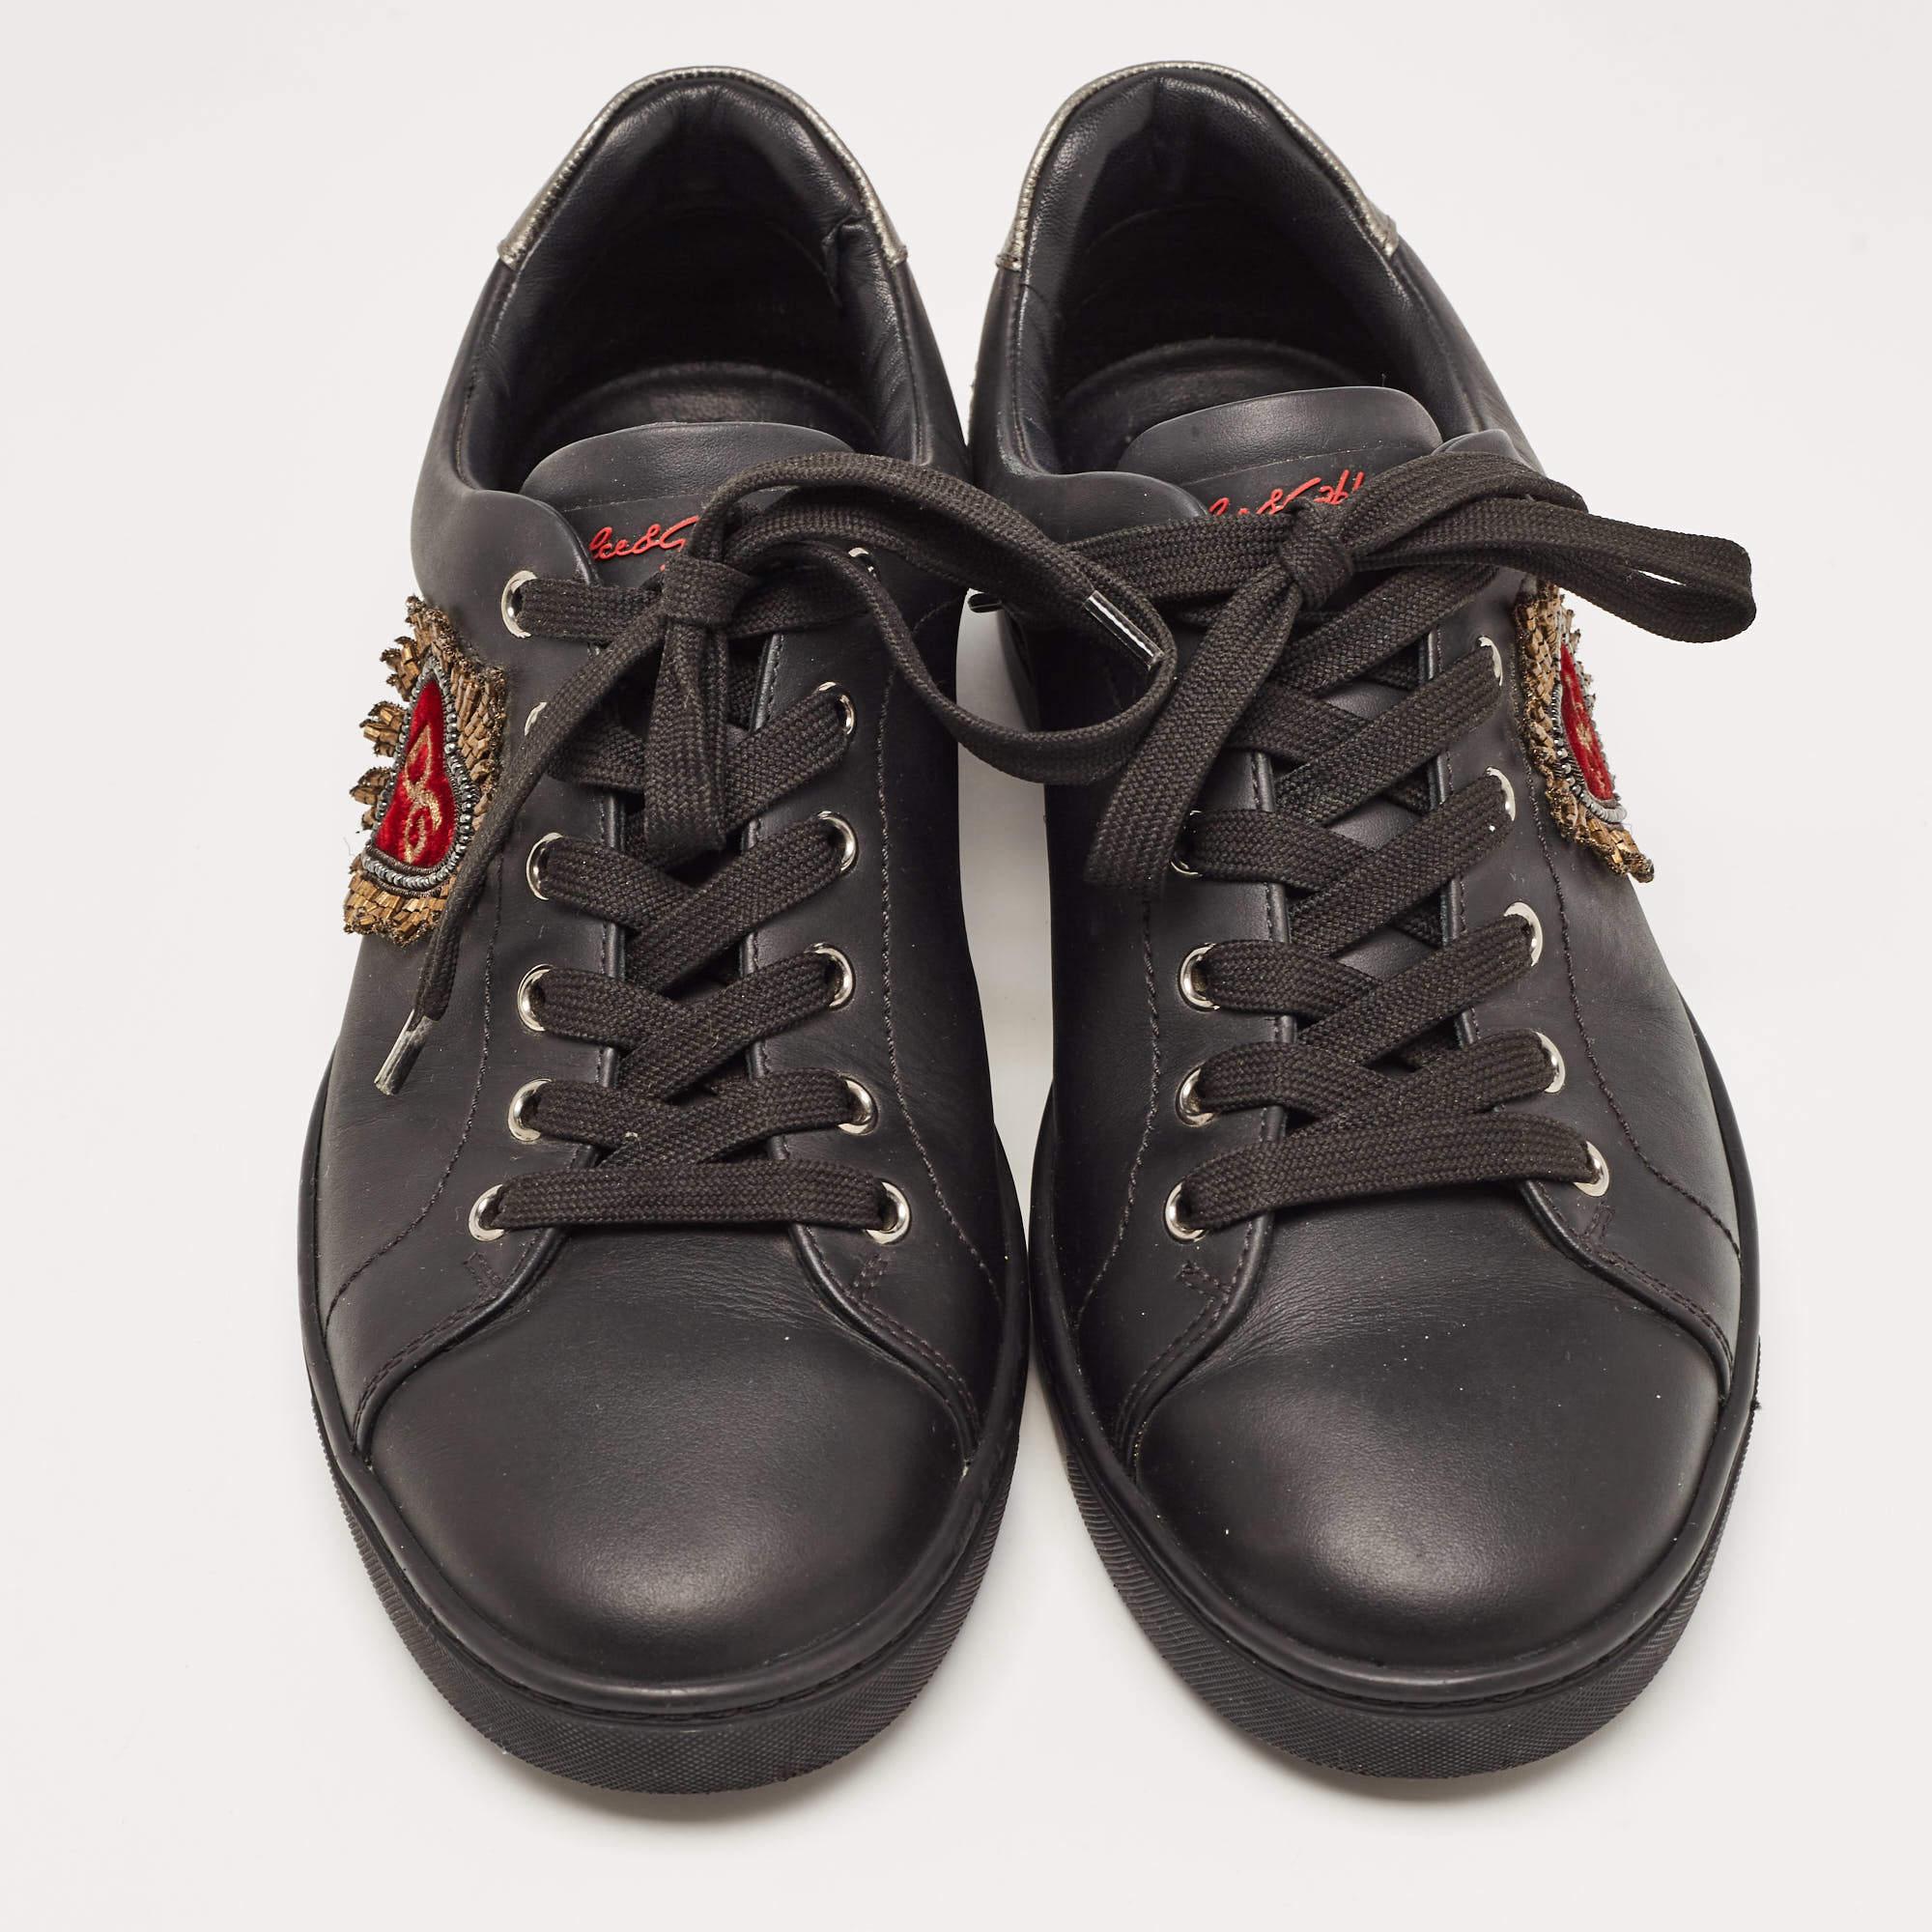 Dolce & Gabbana Black Leather DG Heart Sneakers Size 40 In Good Condition For Sale In Dubai, Al Qouz 2